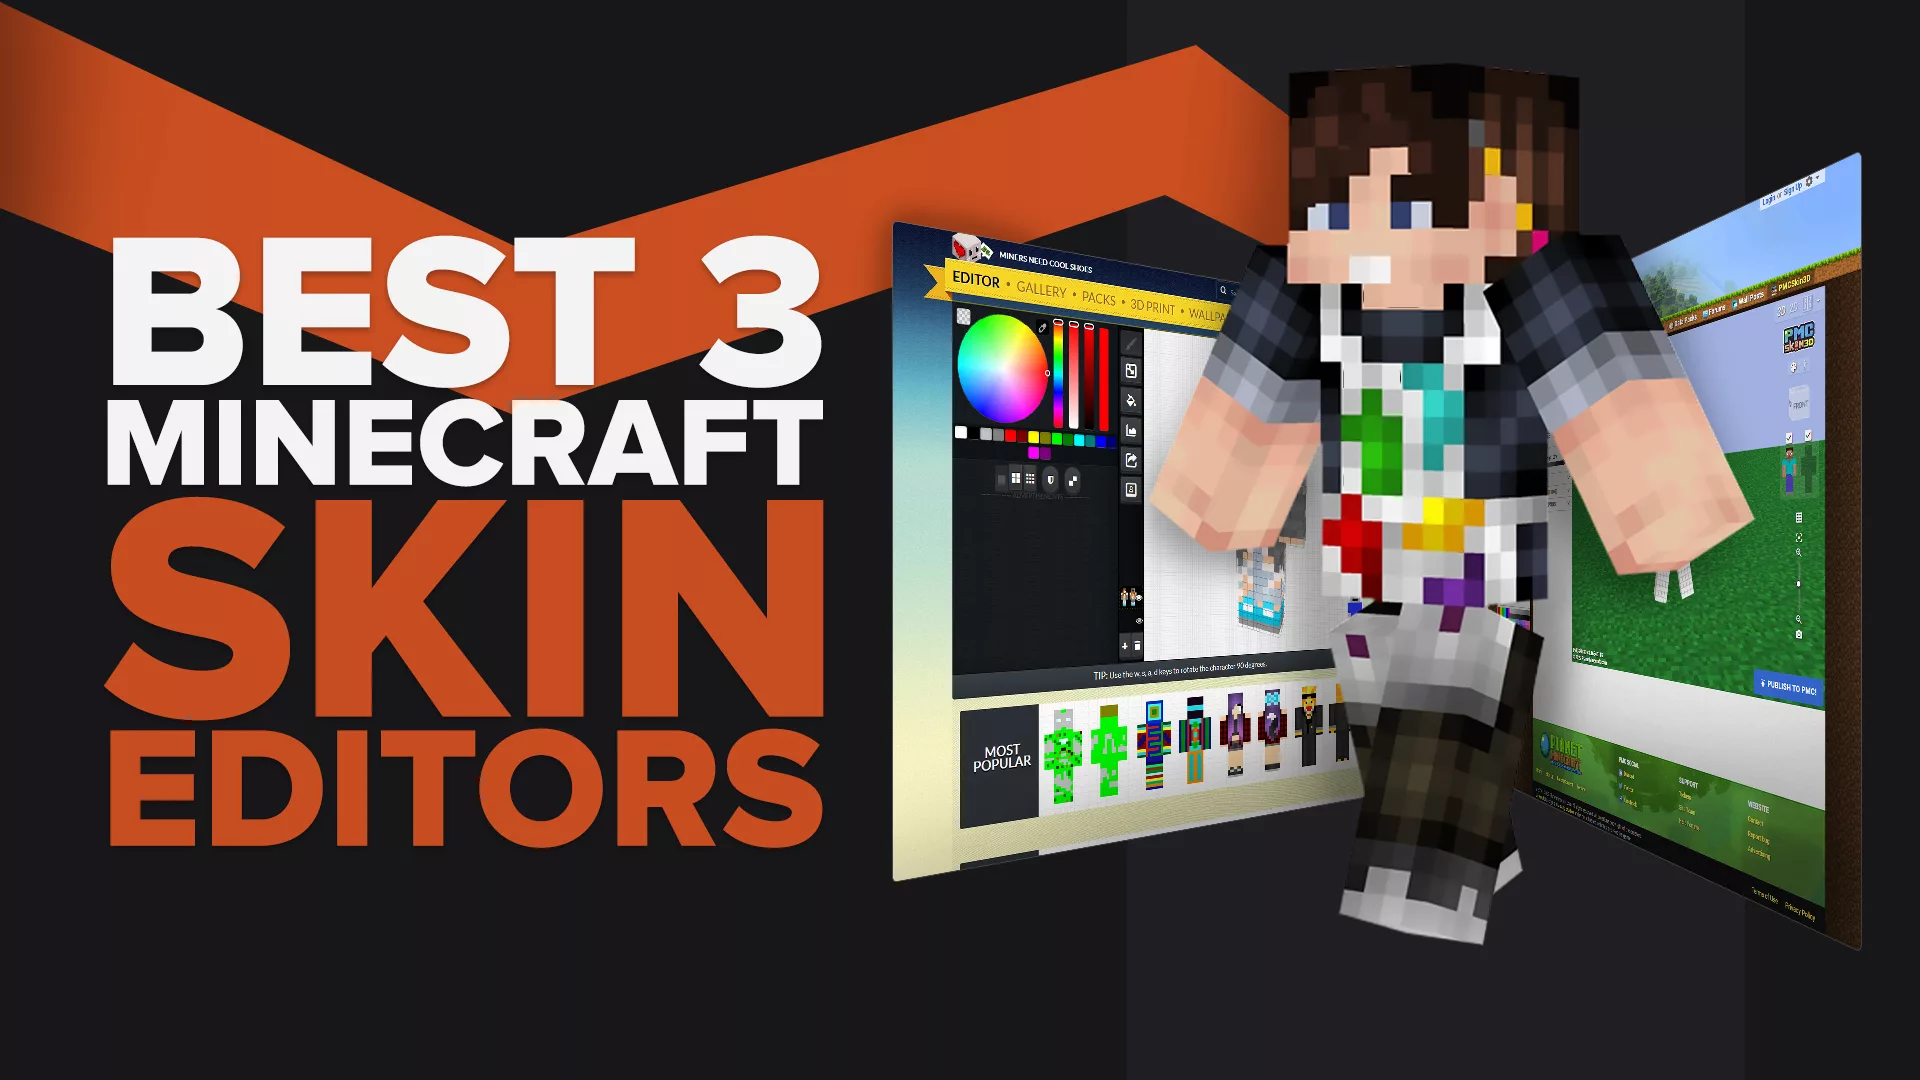 The Best 3 Minecraft Skin Editors